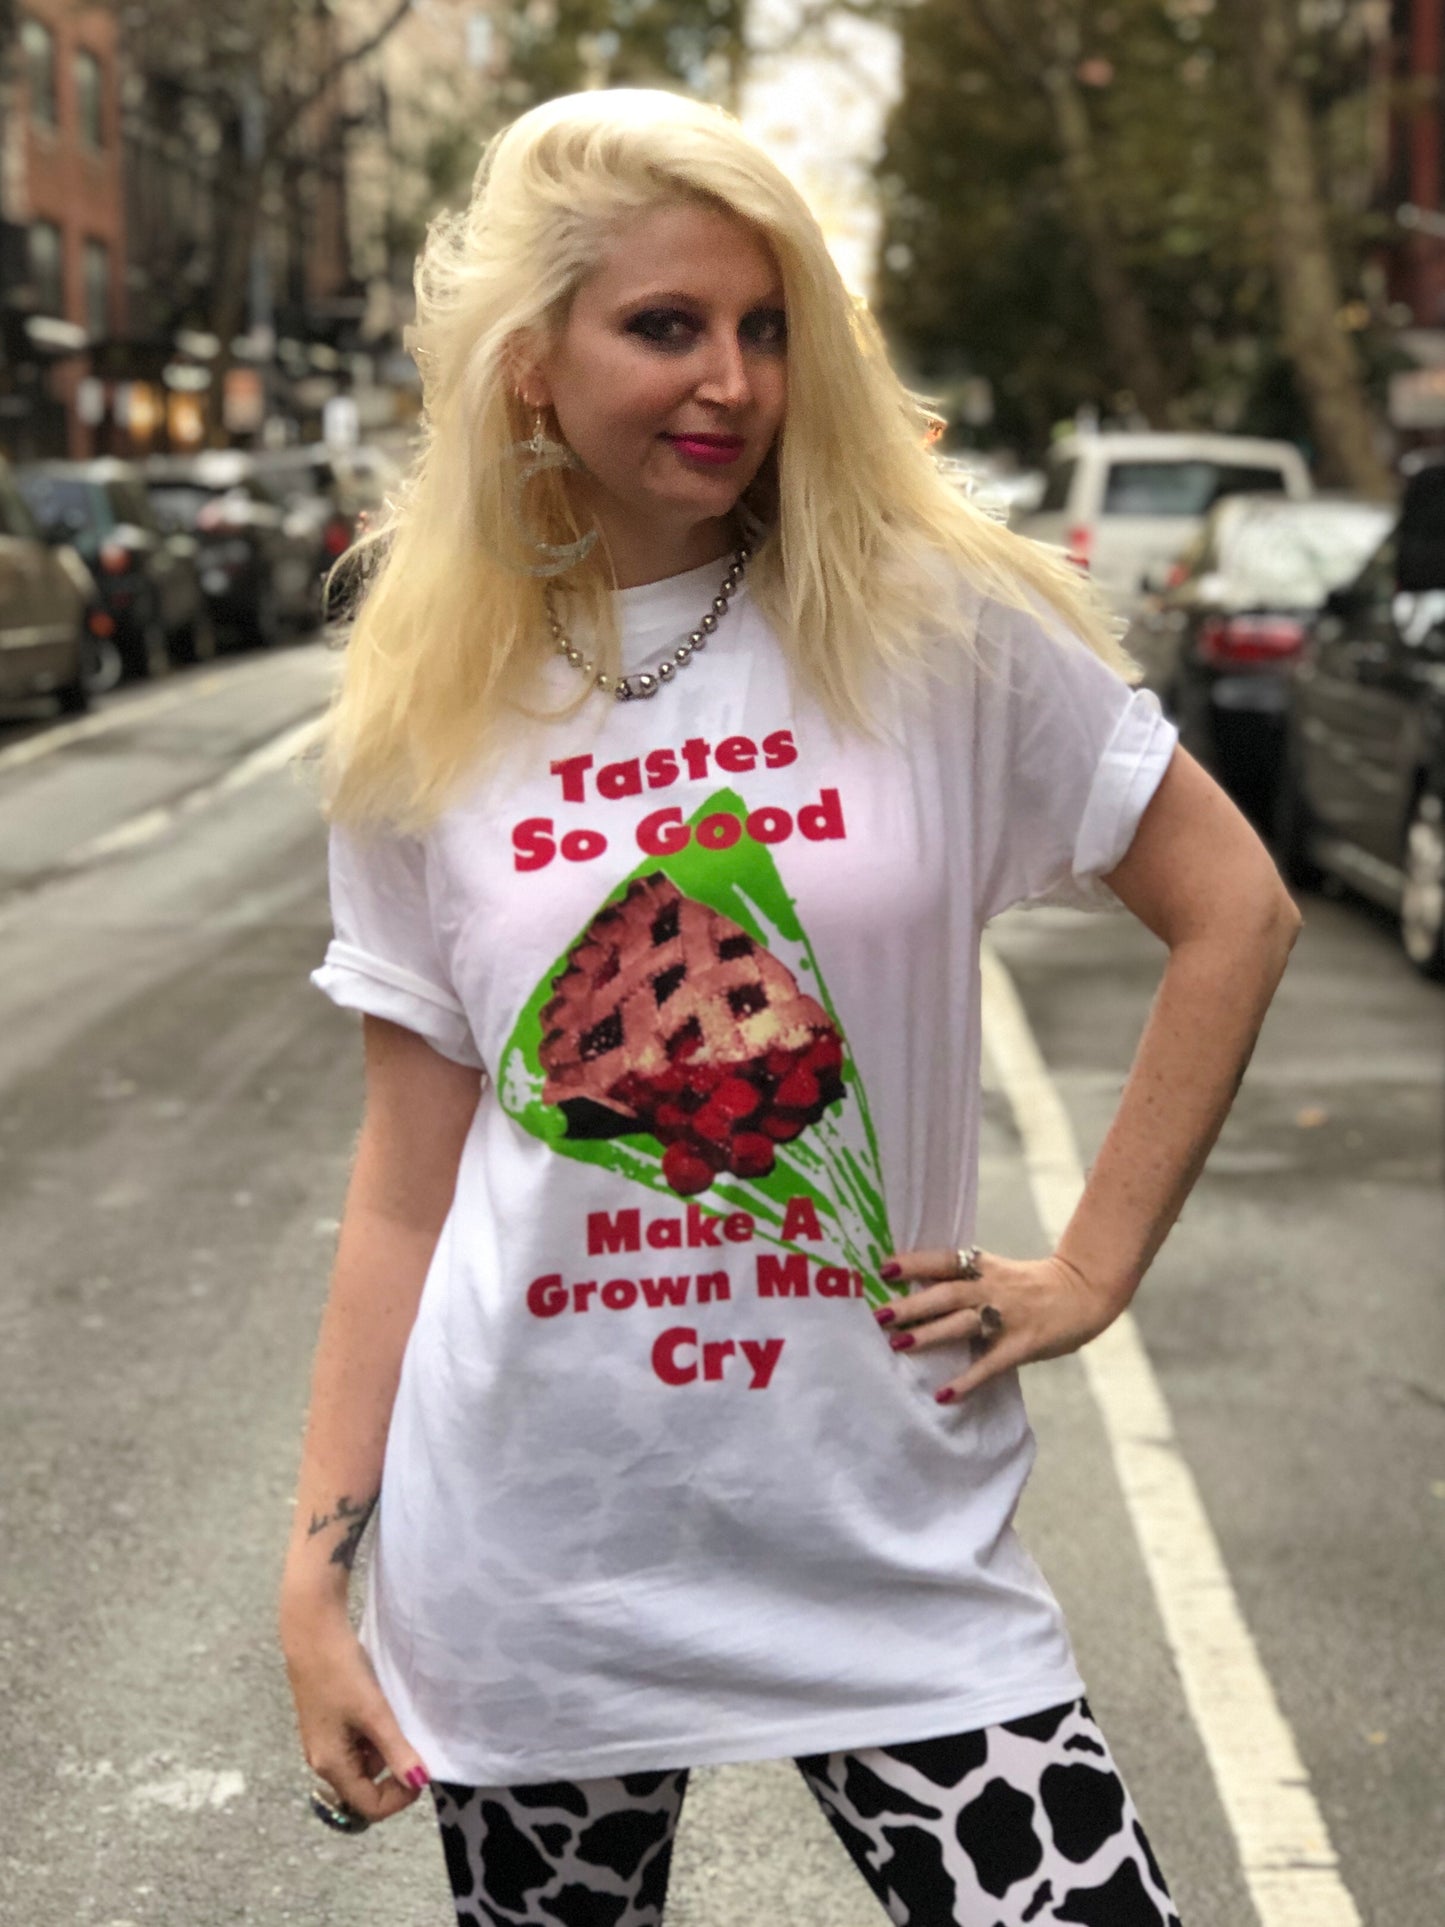 Vintage 1990 Warrant Cherry Pie T-shirt - Spark Pretty